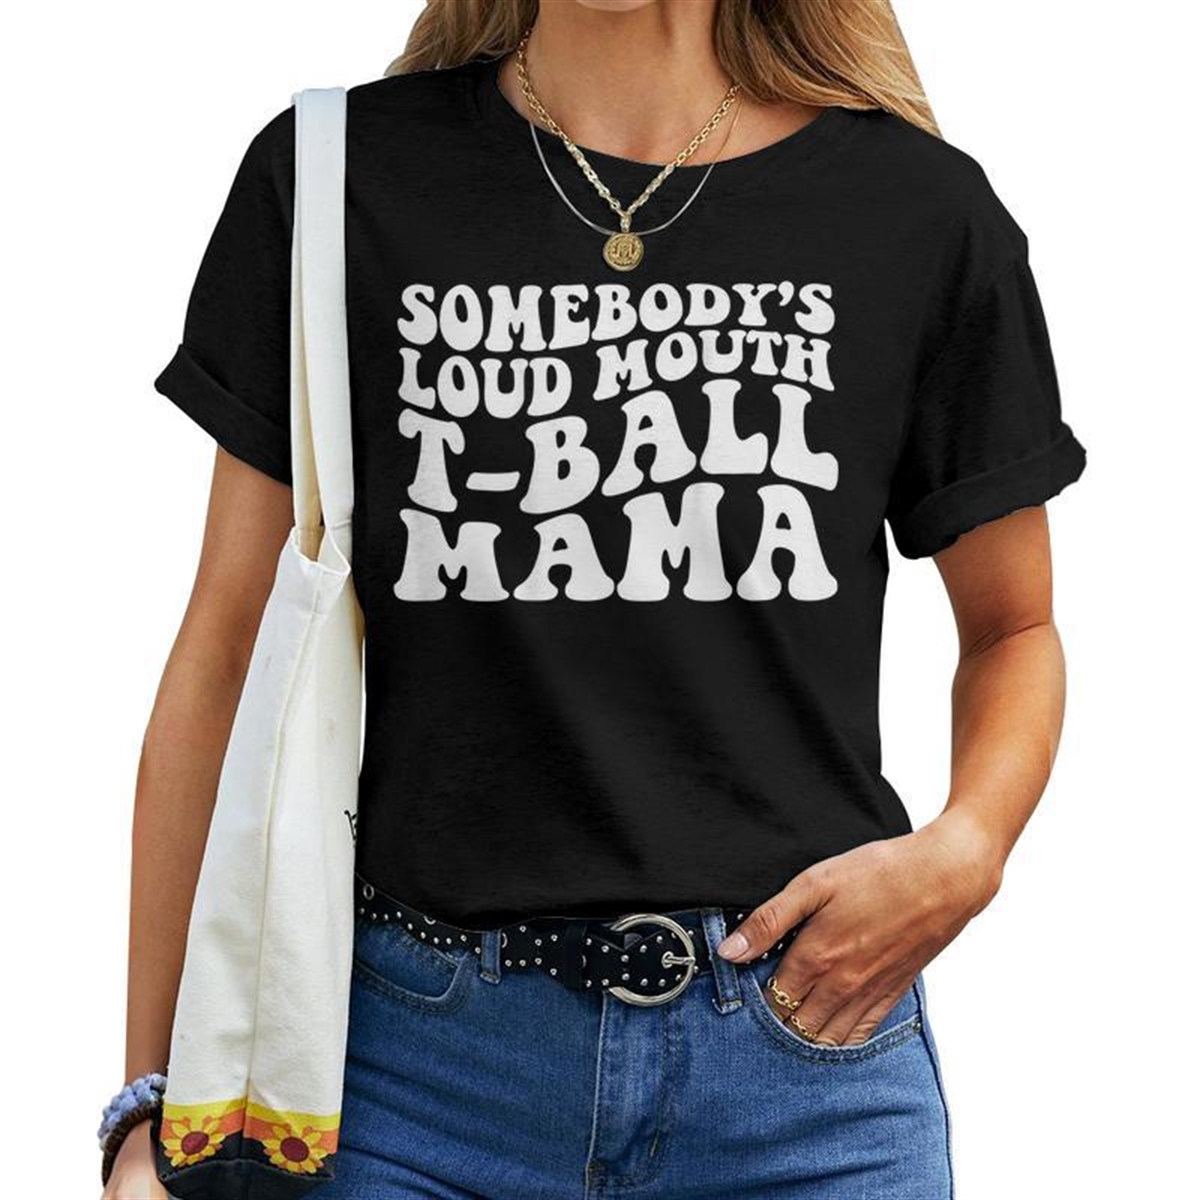 Somebodys Loud Mouth T-ball Mama For Mama Women T-shirt